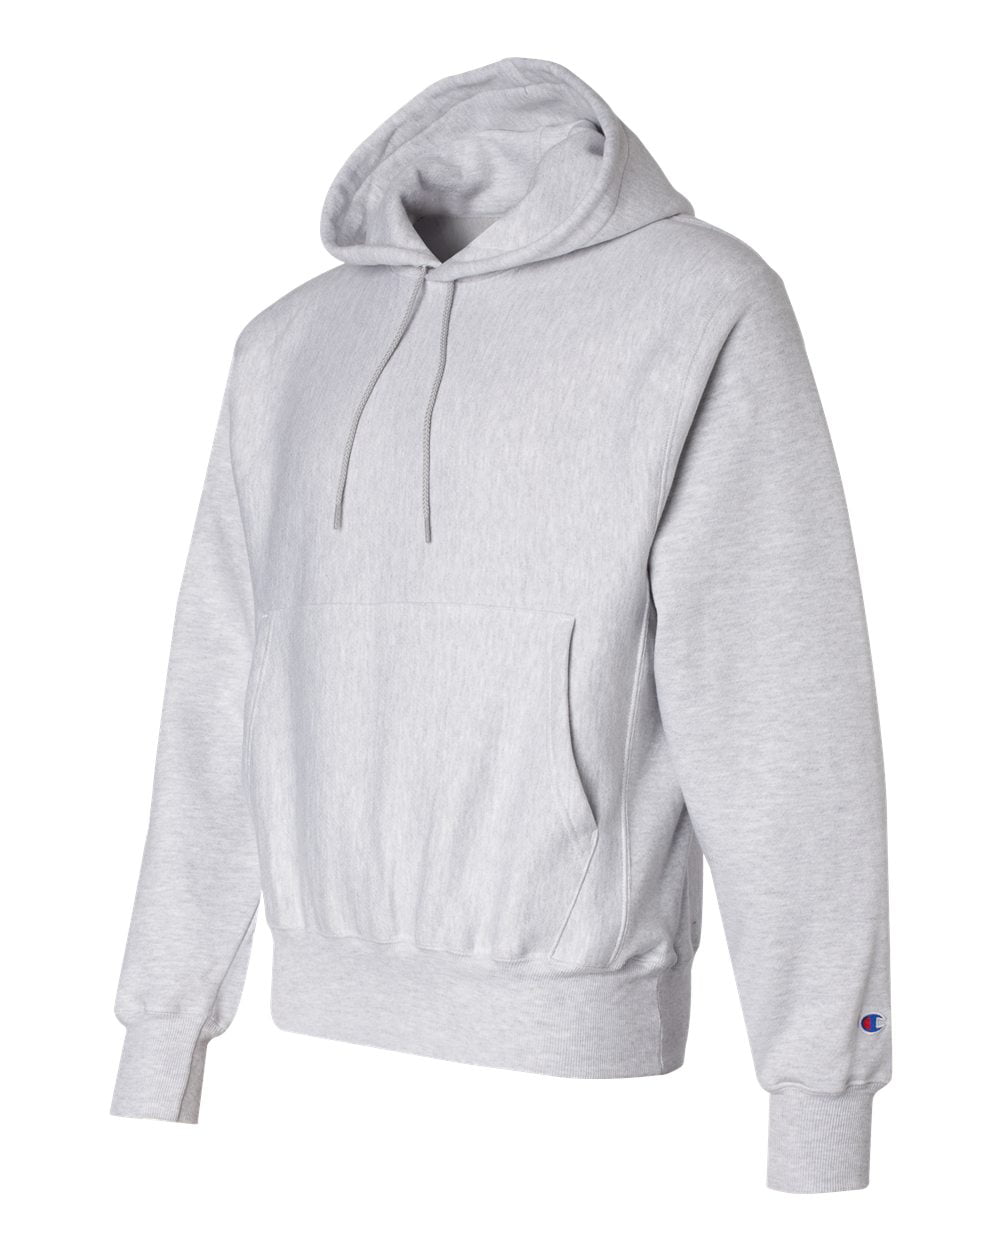 Men's Reverse Hood, Silver Grey - XL - Walmart.com